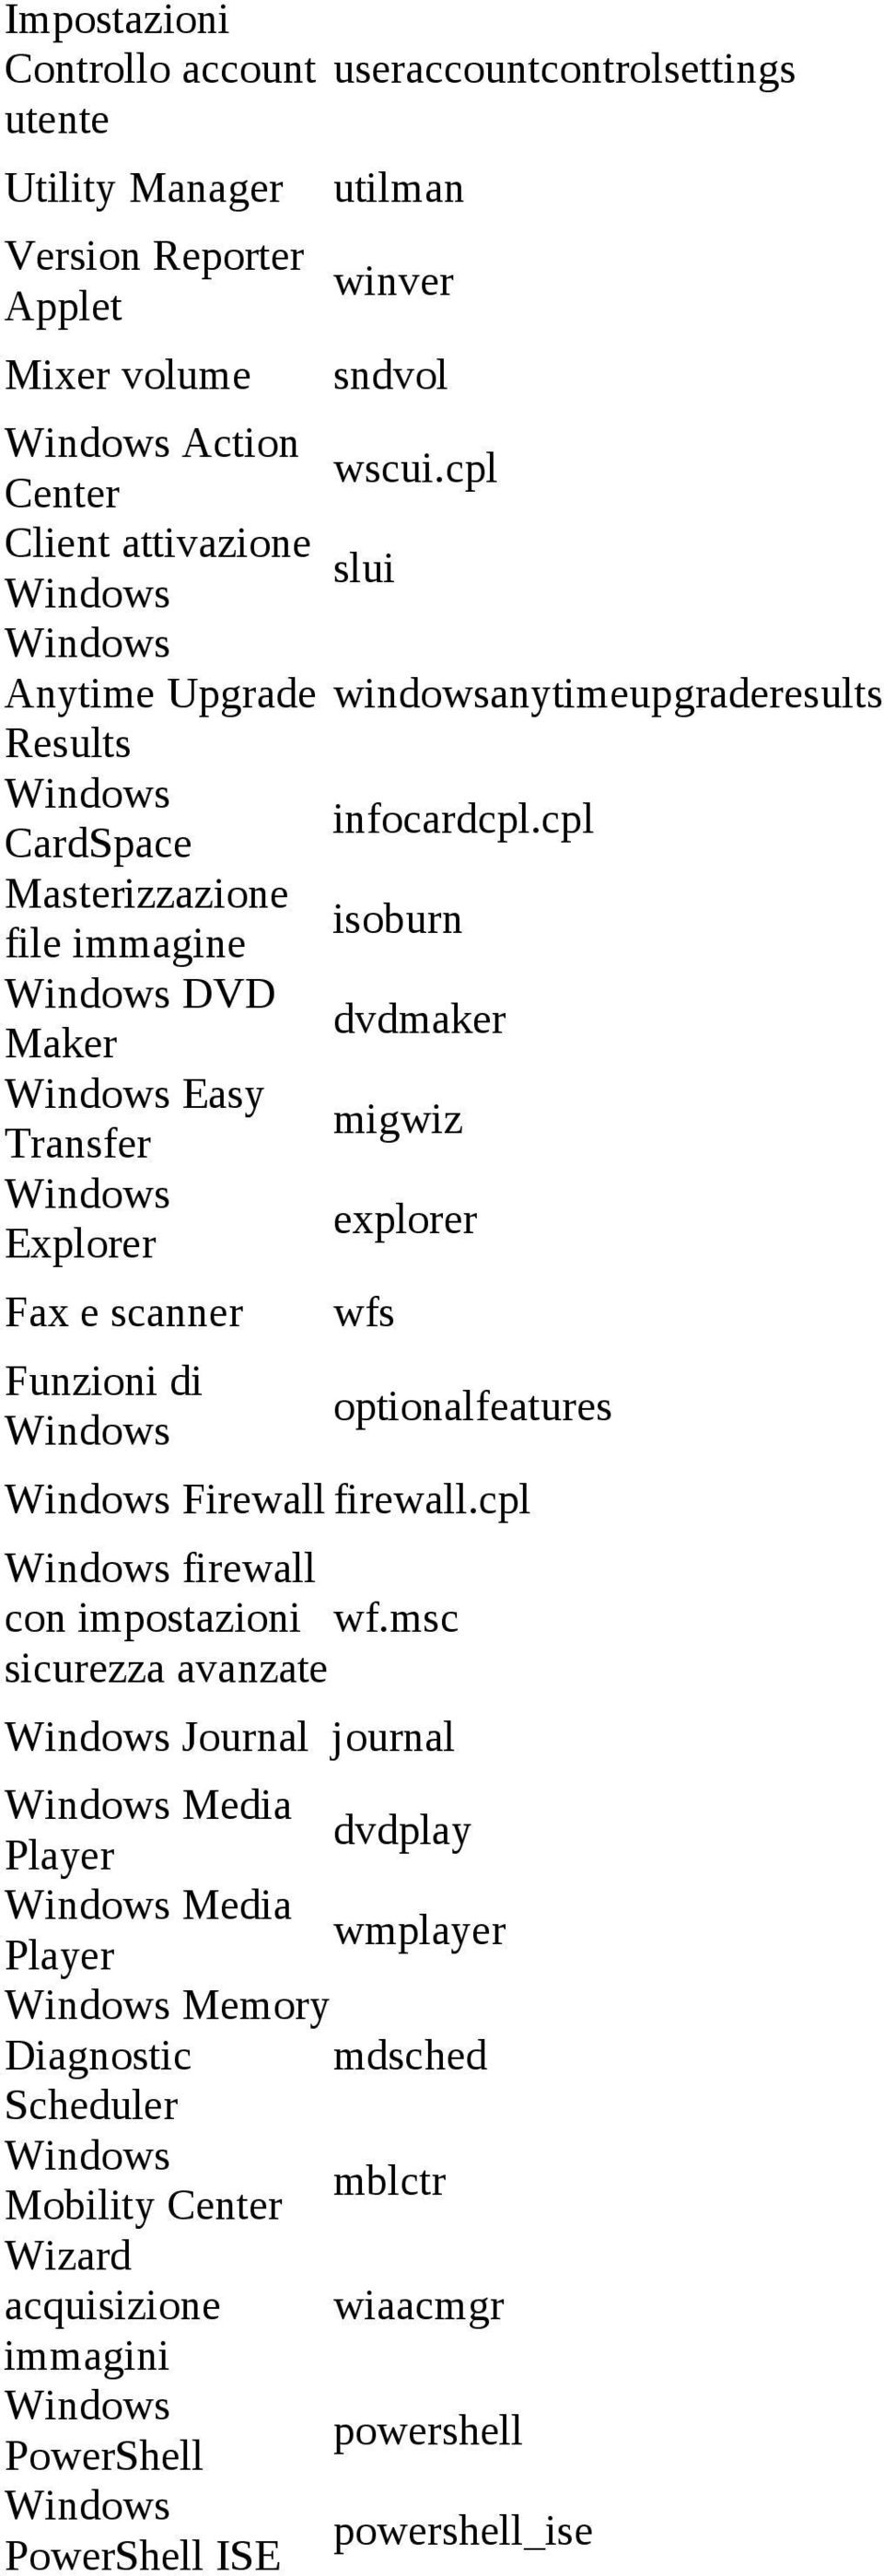 cpl CardSpace Masterizzazione isoburn file immagine DVD dvdmaker Maker Easy migwiz Transfer explorer Explorer Fax e scanner Funzioni di wfs optionalfeatures Firewall